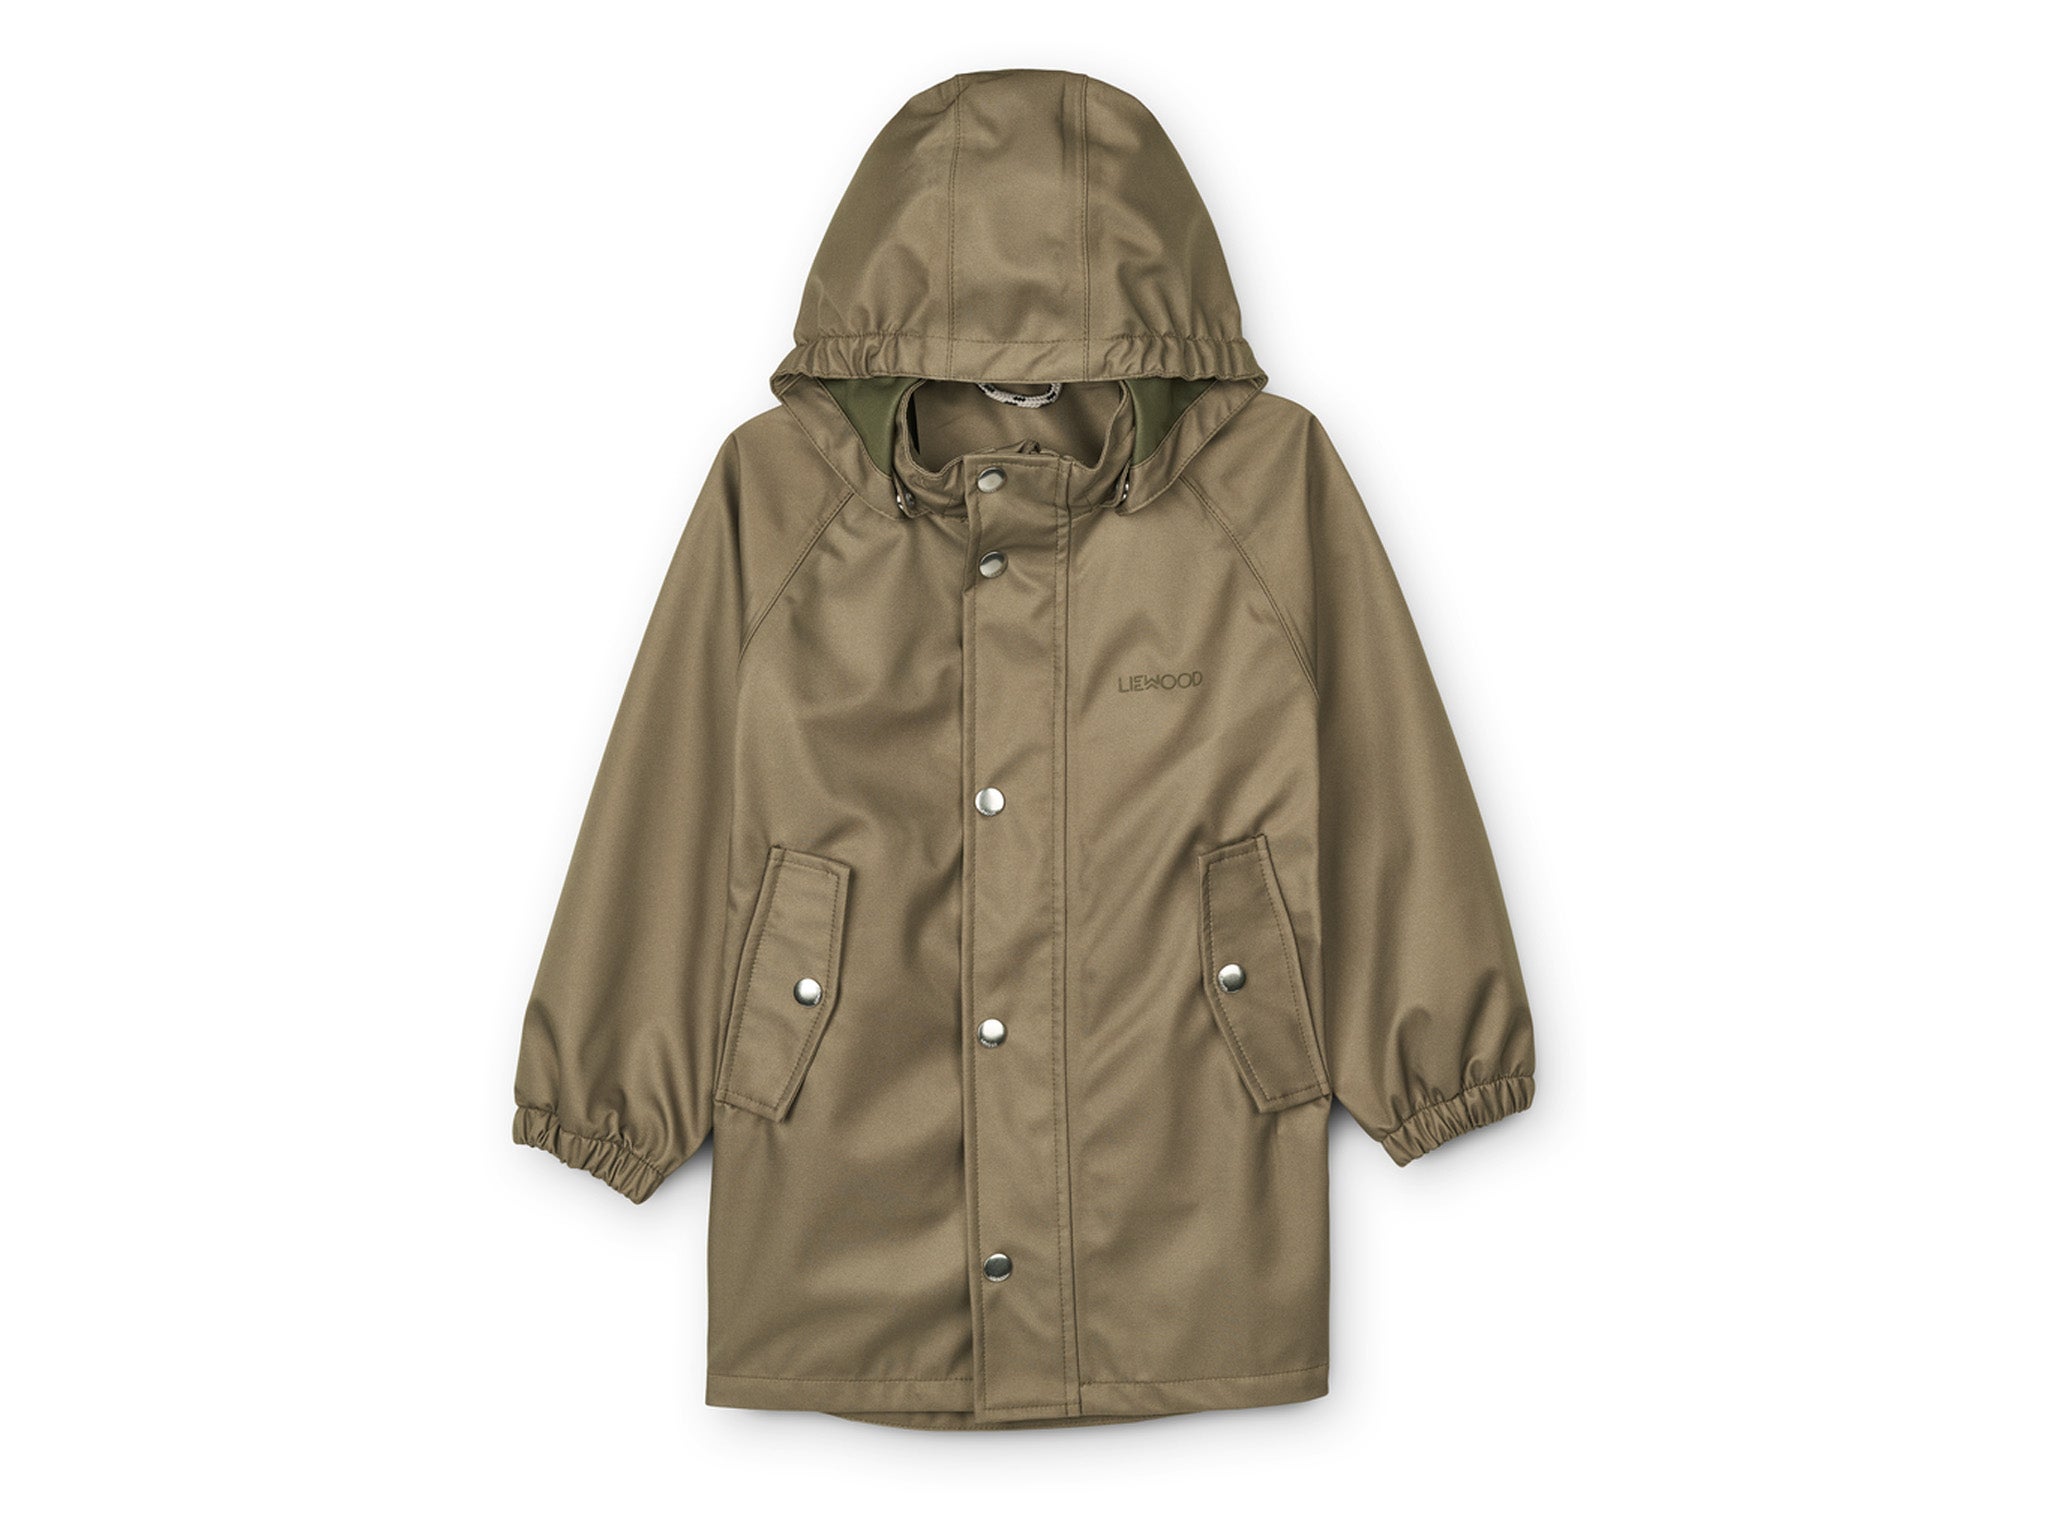 liewood-Indybest-raincoat-review.jpg